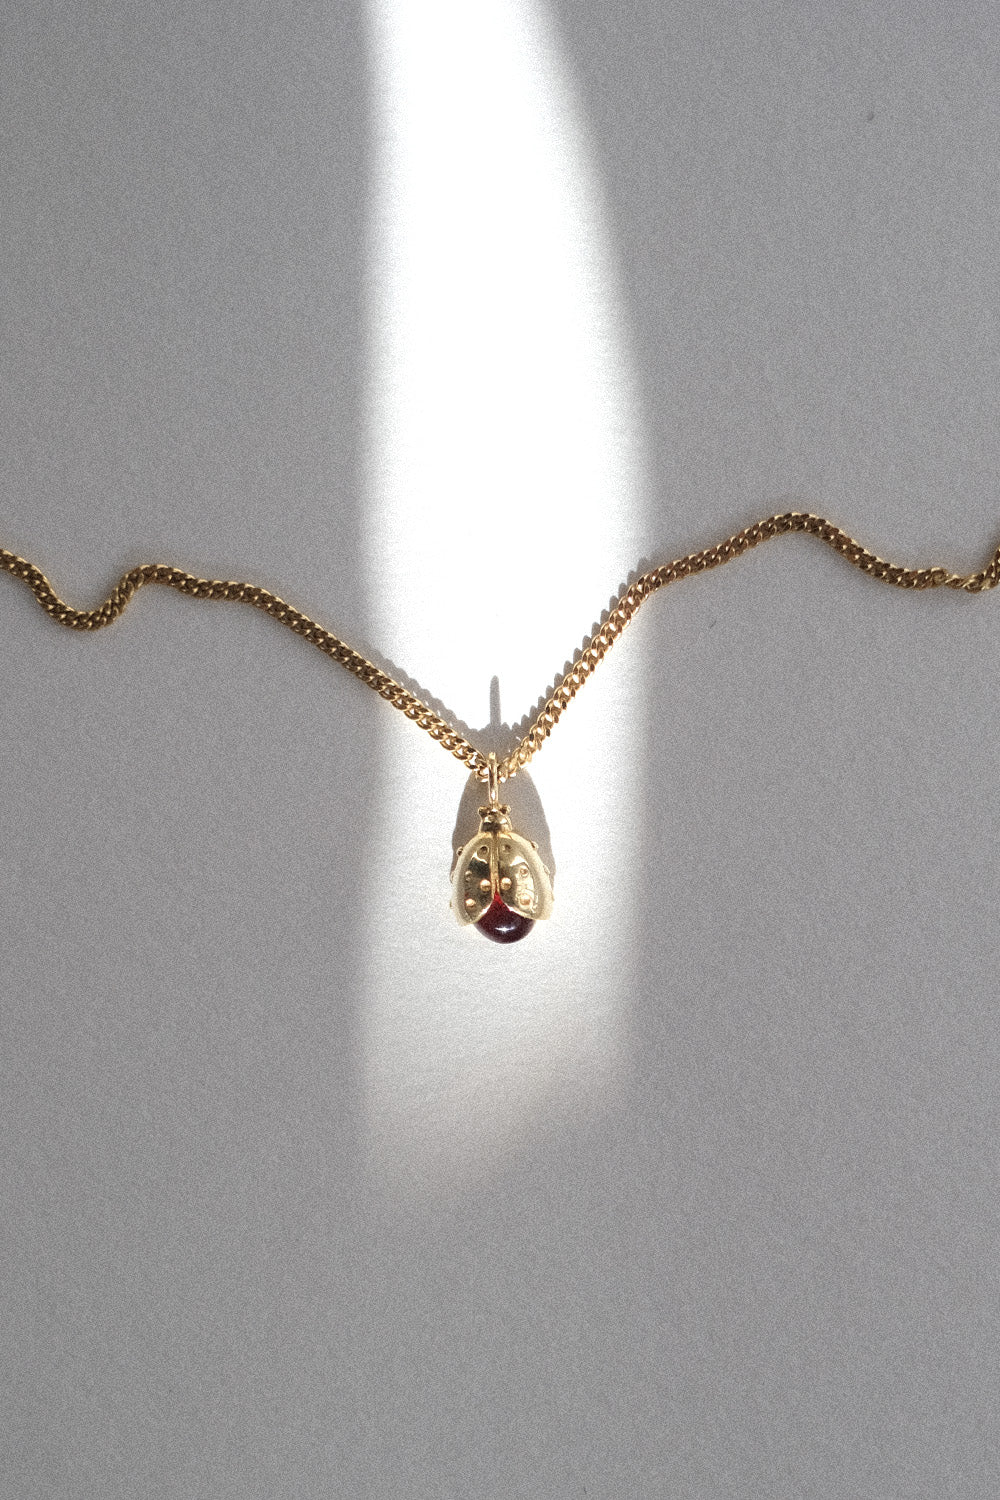 The Fine Gold Lucky Ladybug Charm